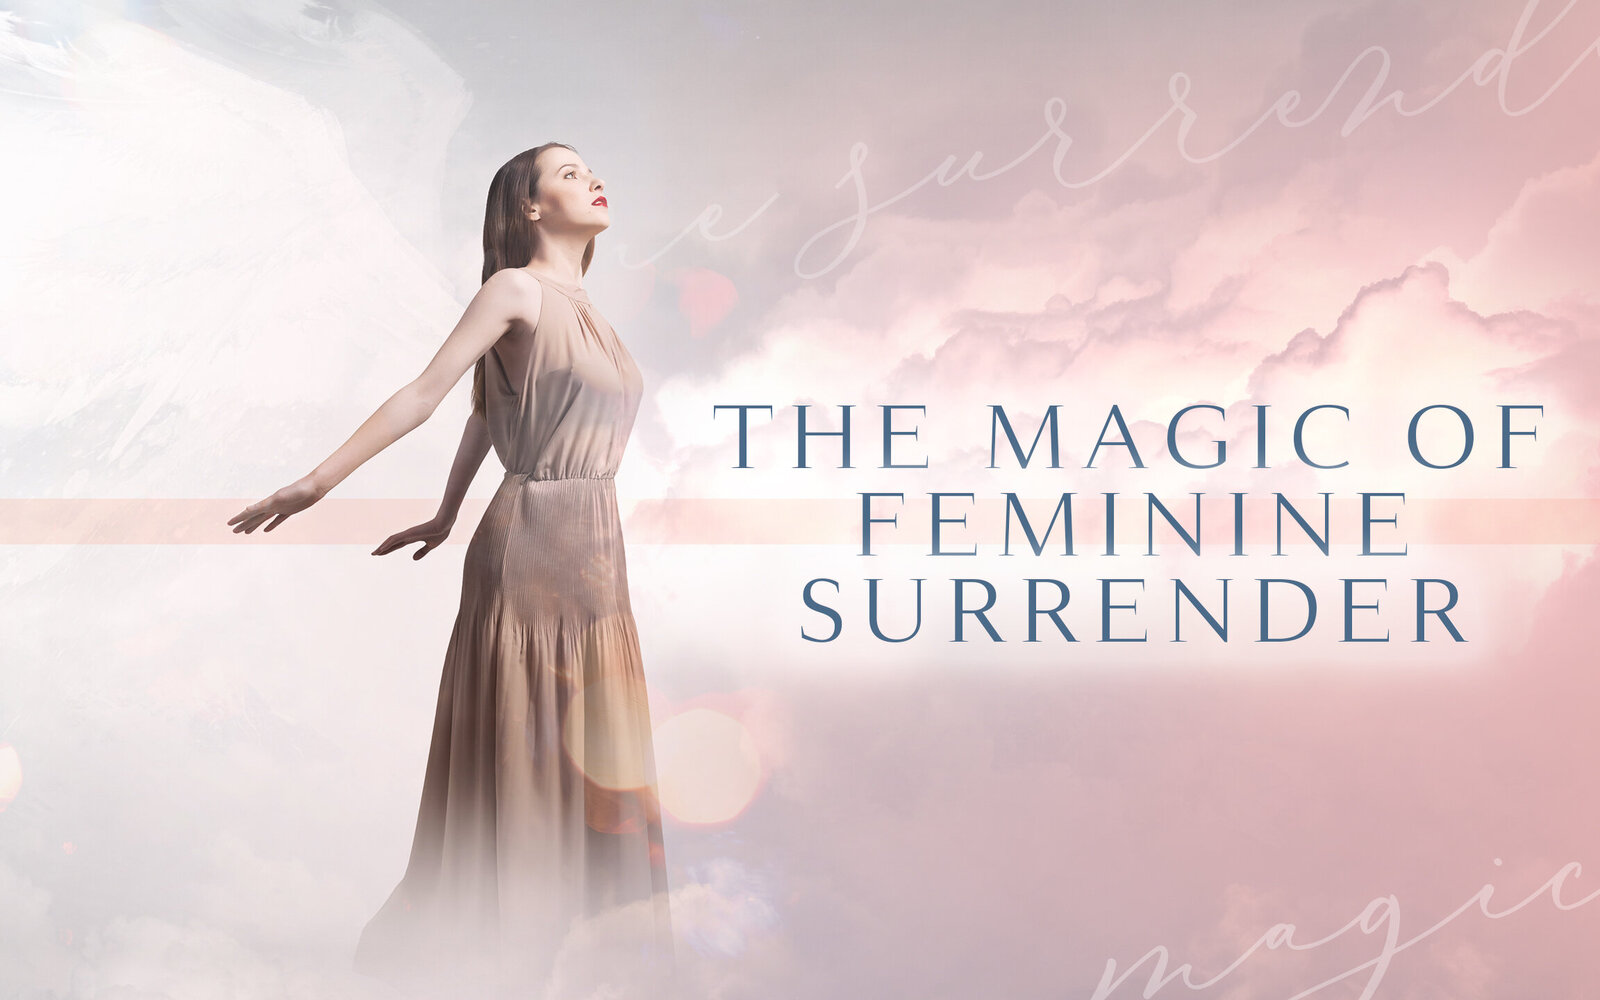 THE MAGIIC OF FEMININE SURRENDER